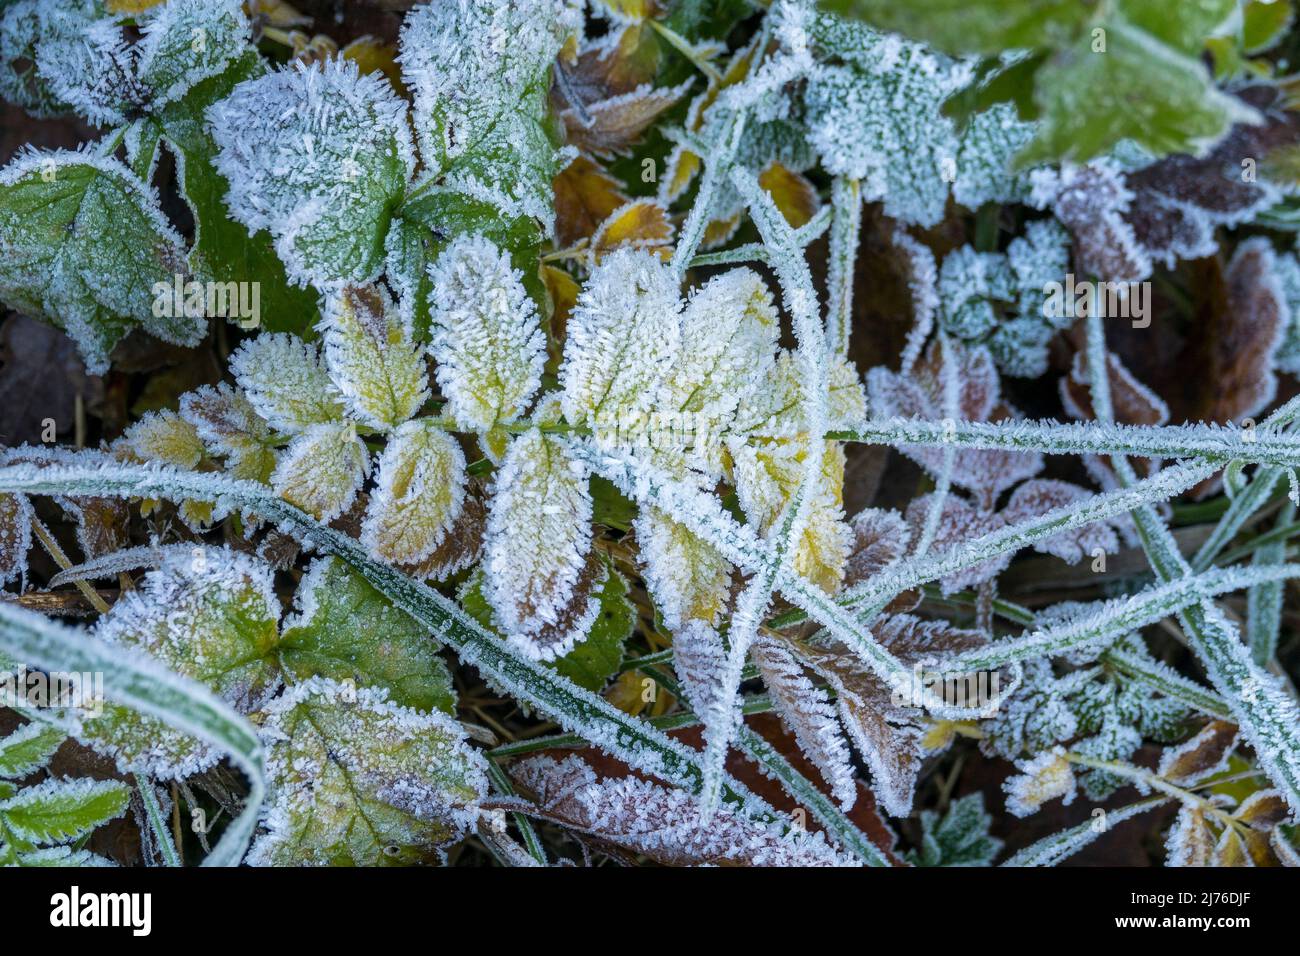 Germania, Reutlingen, foglie e erba ricoperte di gelo. Foto Stock